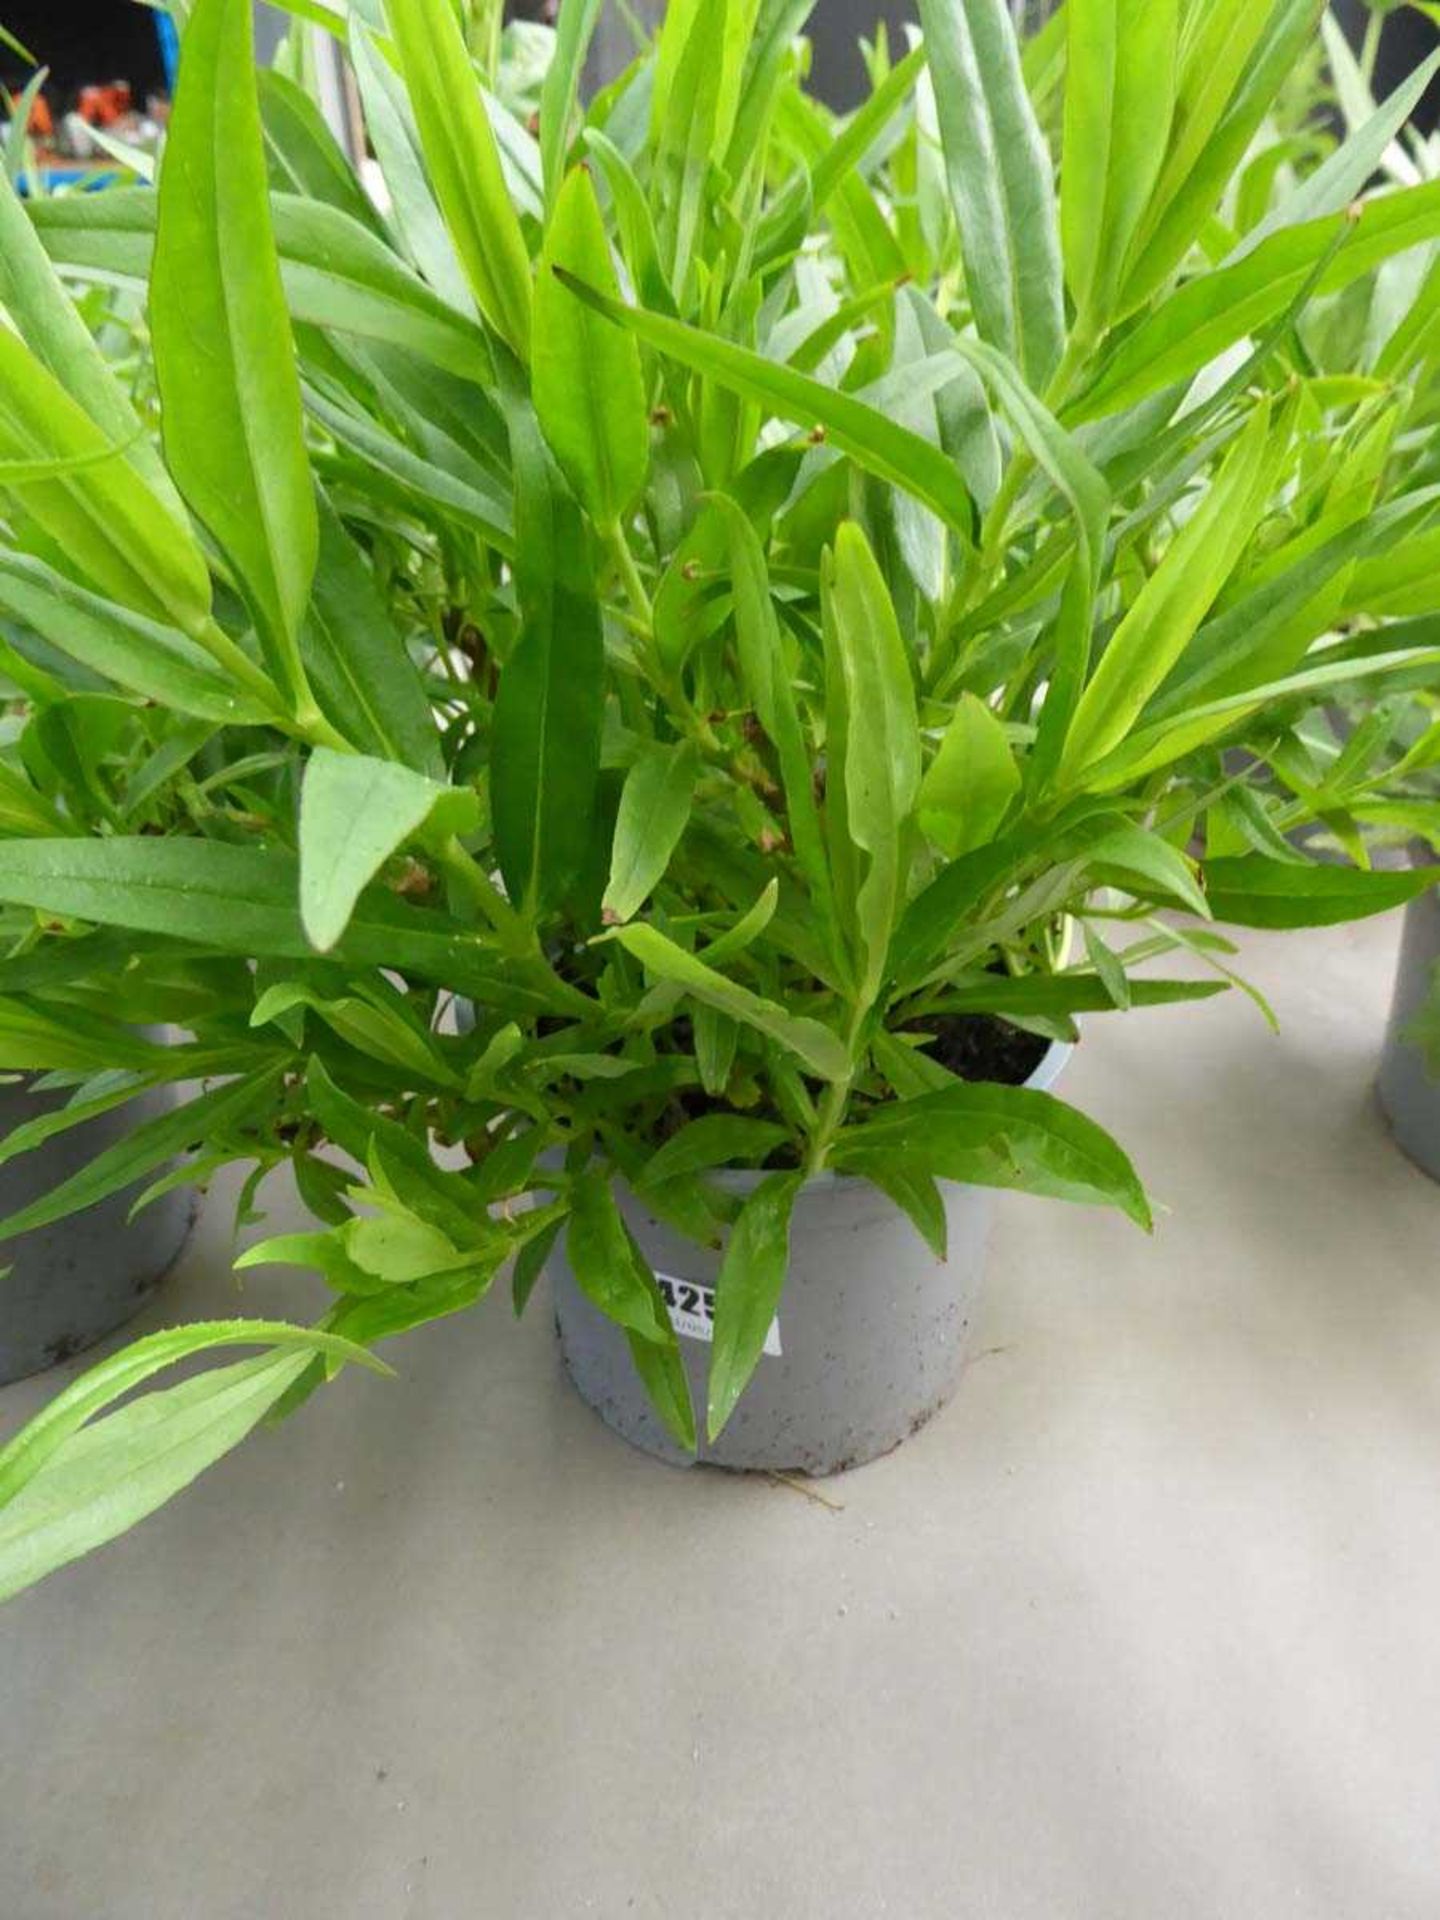 Potted Penteonomum plant